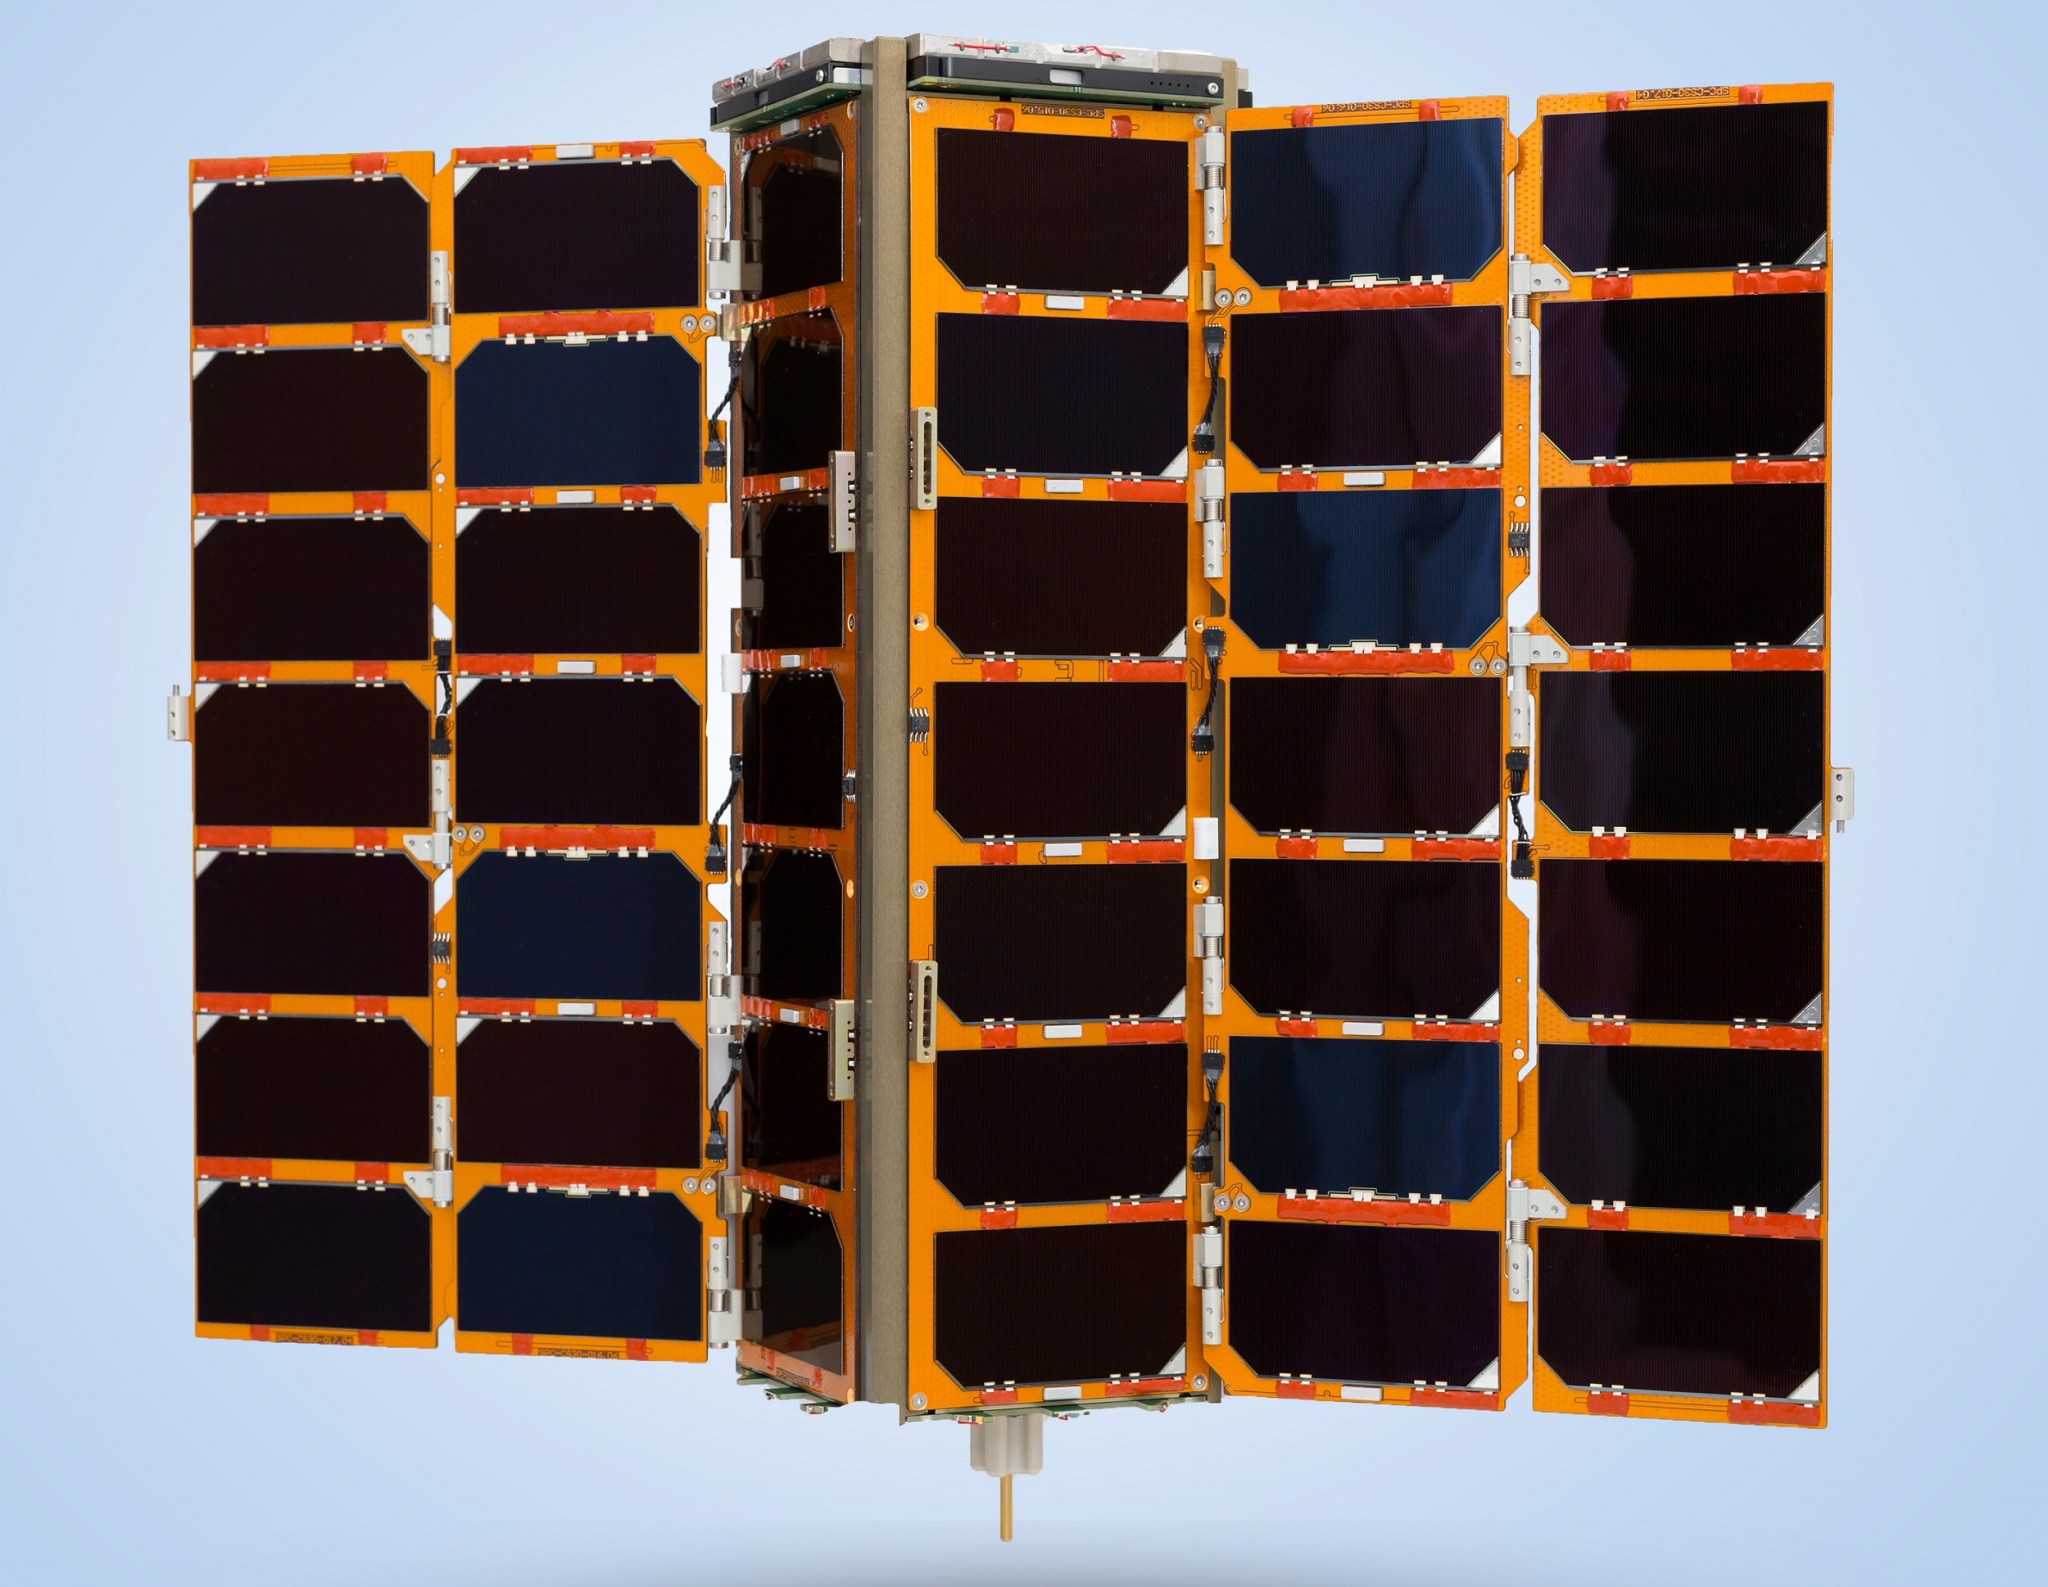 SPIRE, which operates the LEMUR-2 constellation of 3U CubeSat satellites